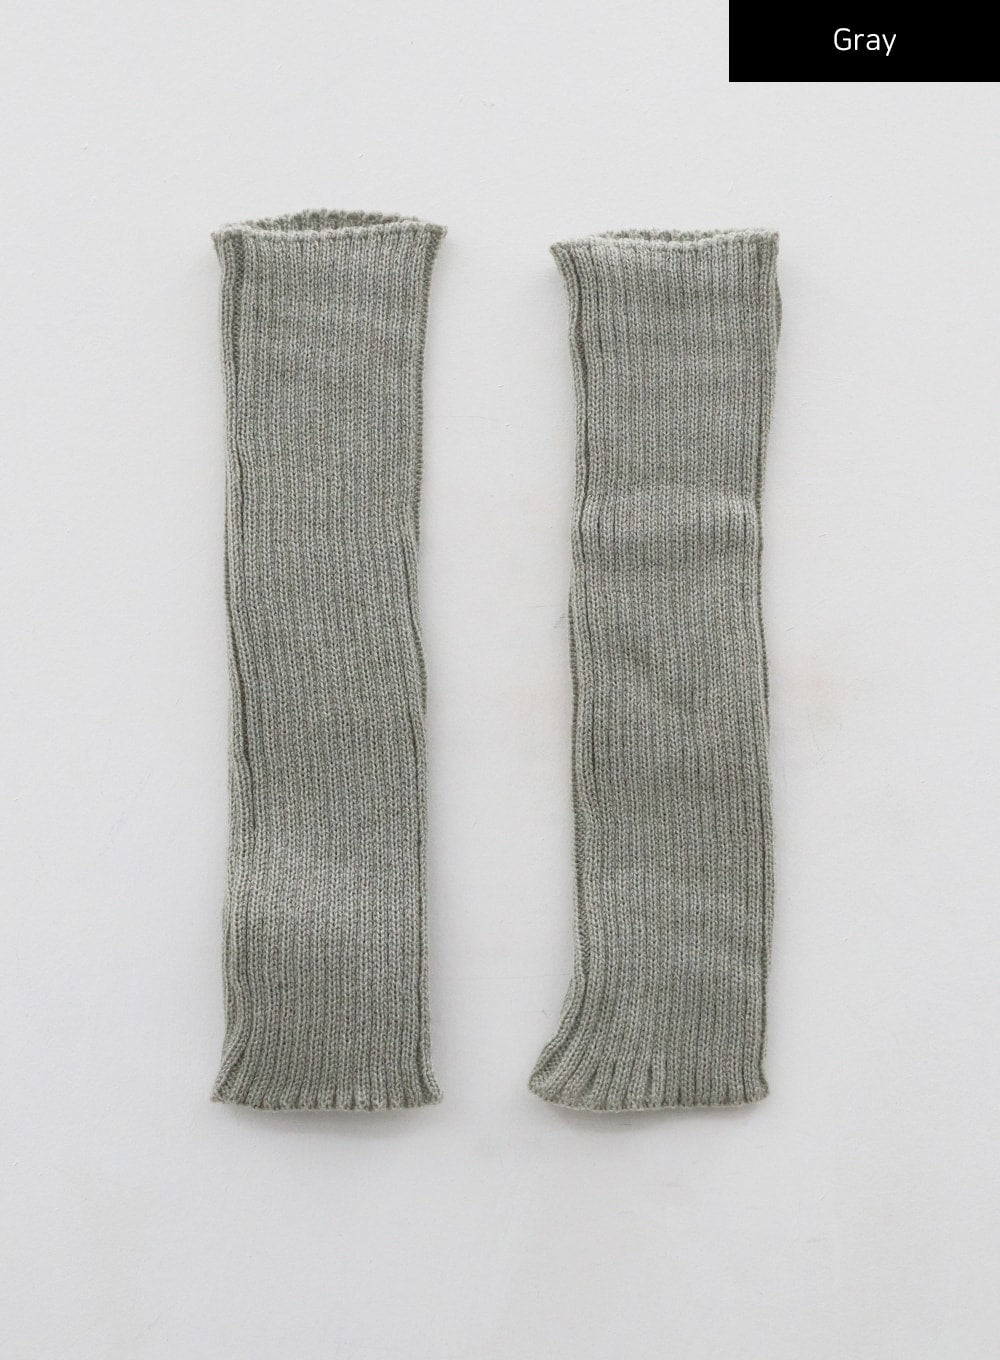 Knit Leg Warmers with Roll Edges BN29 - Lewkin